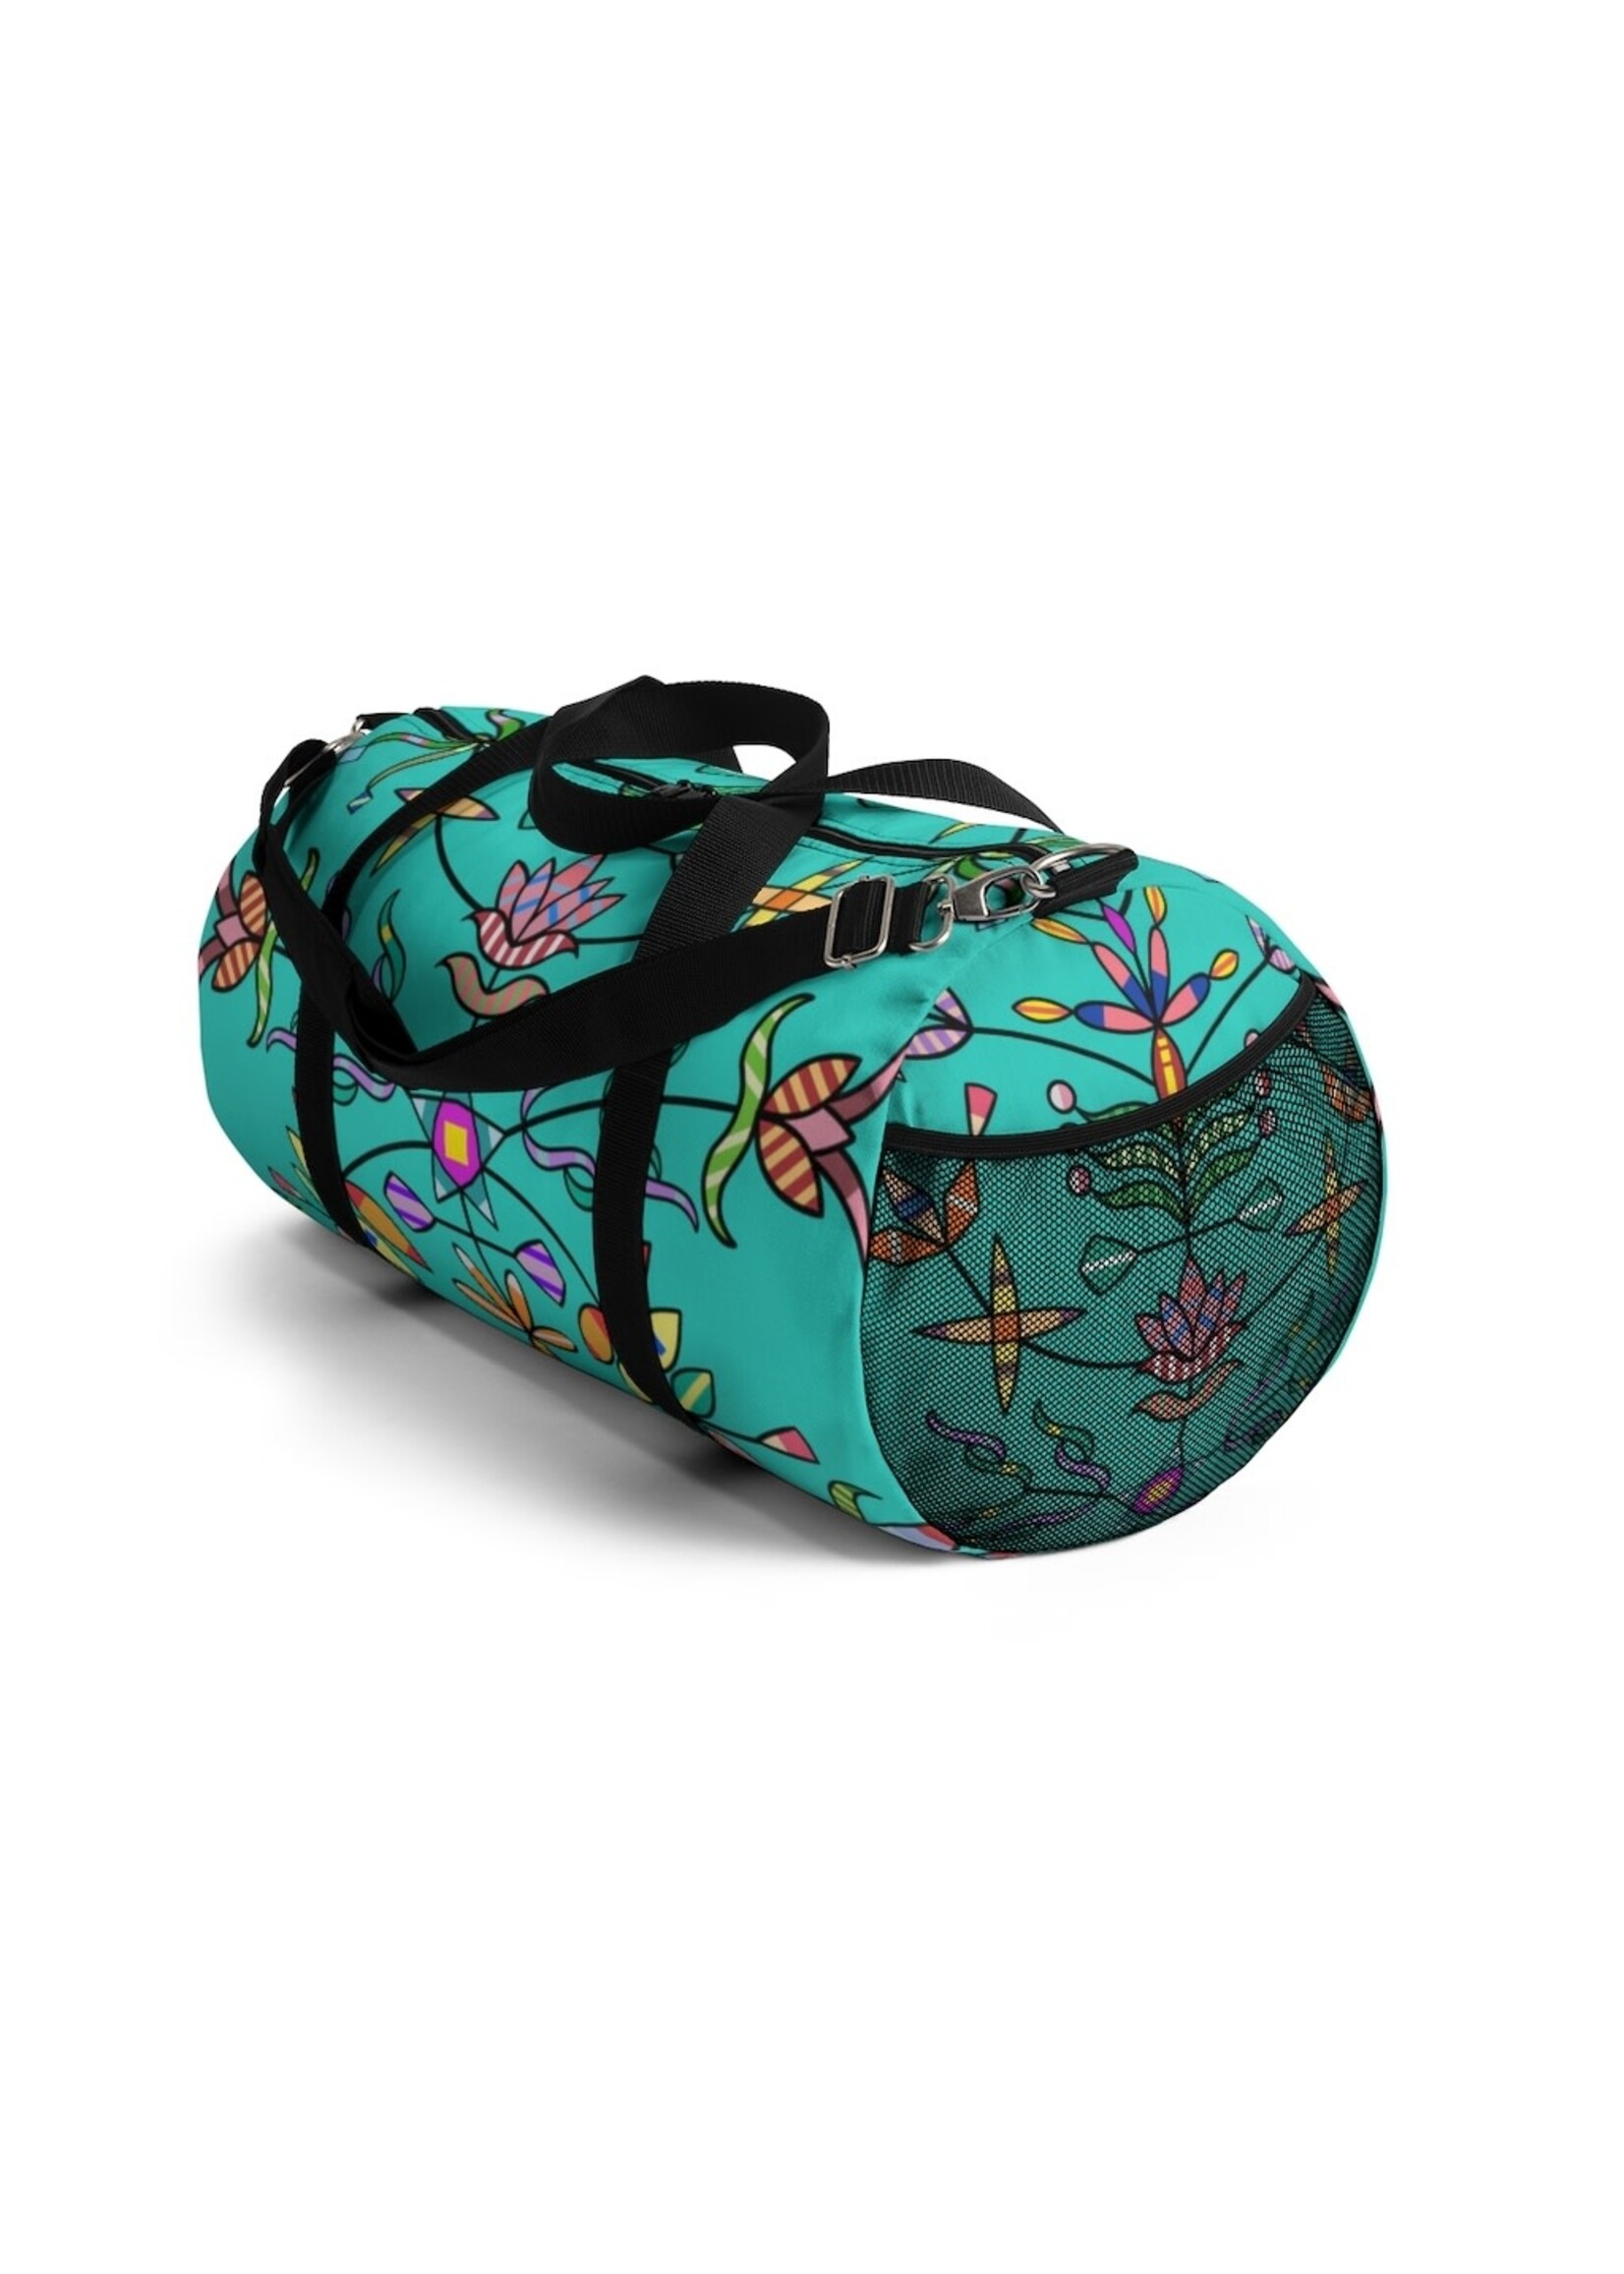 Turquoise Dakota Floral Travel Duffel Bag